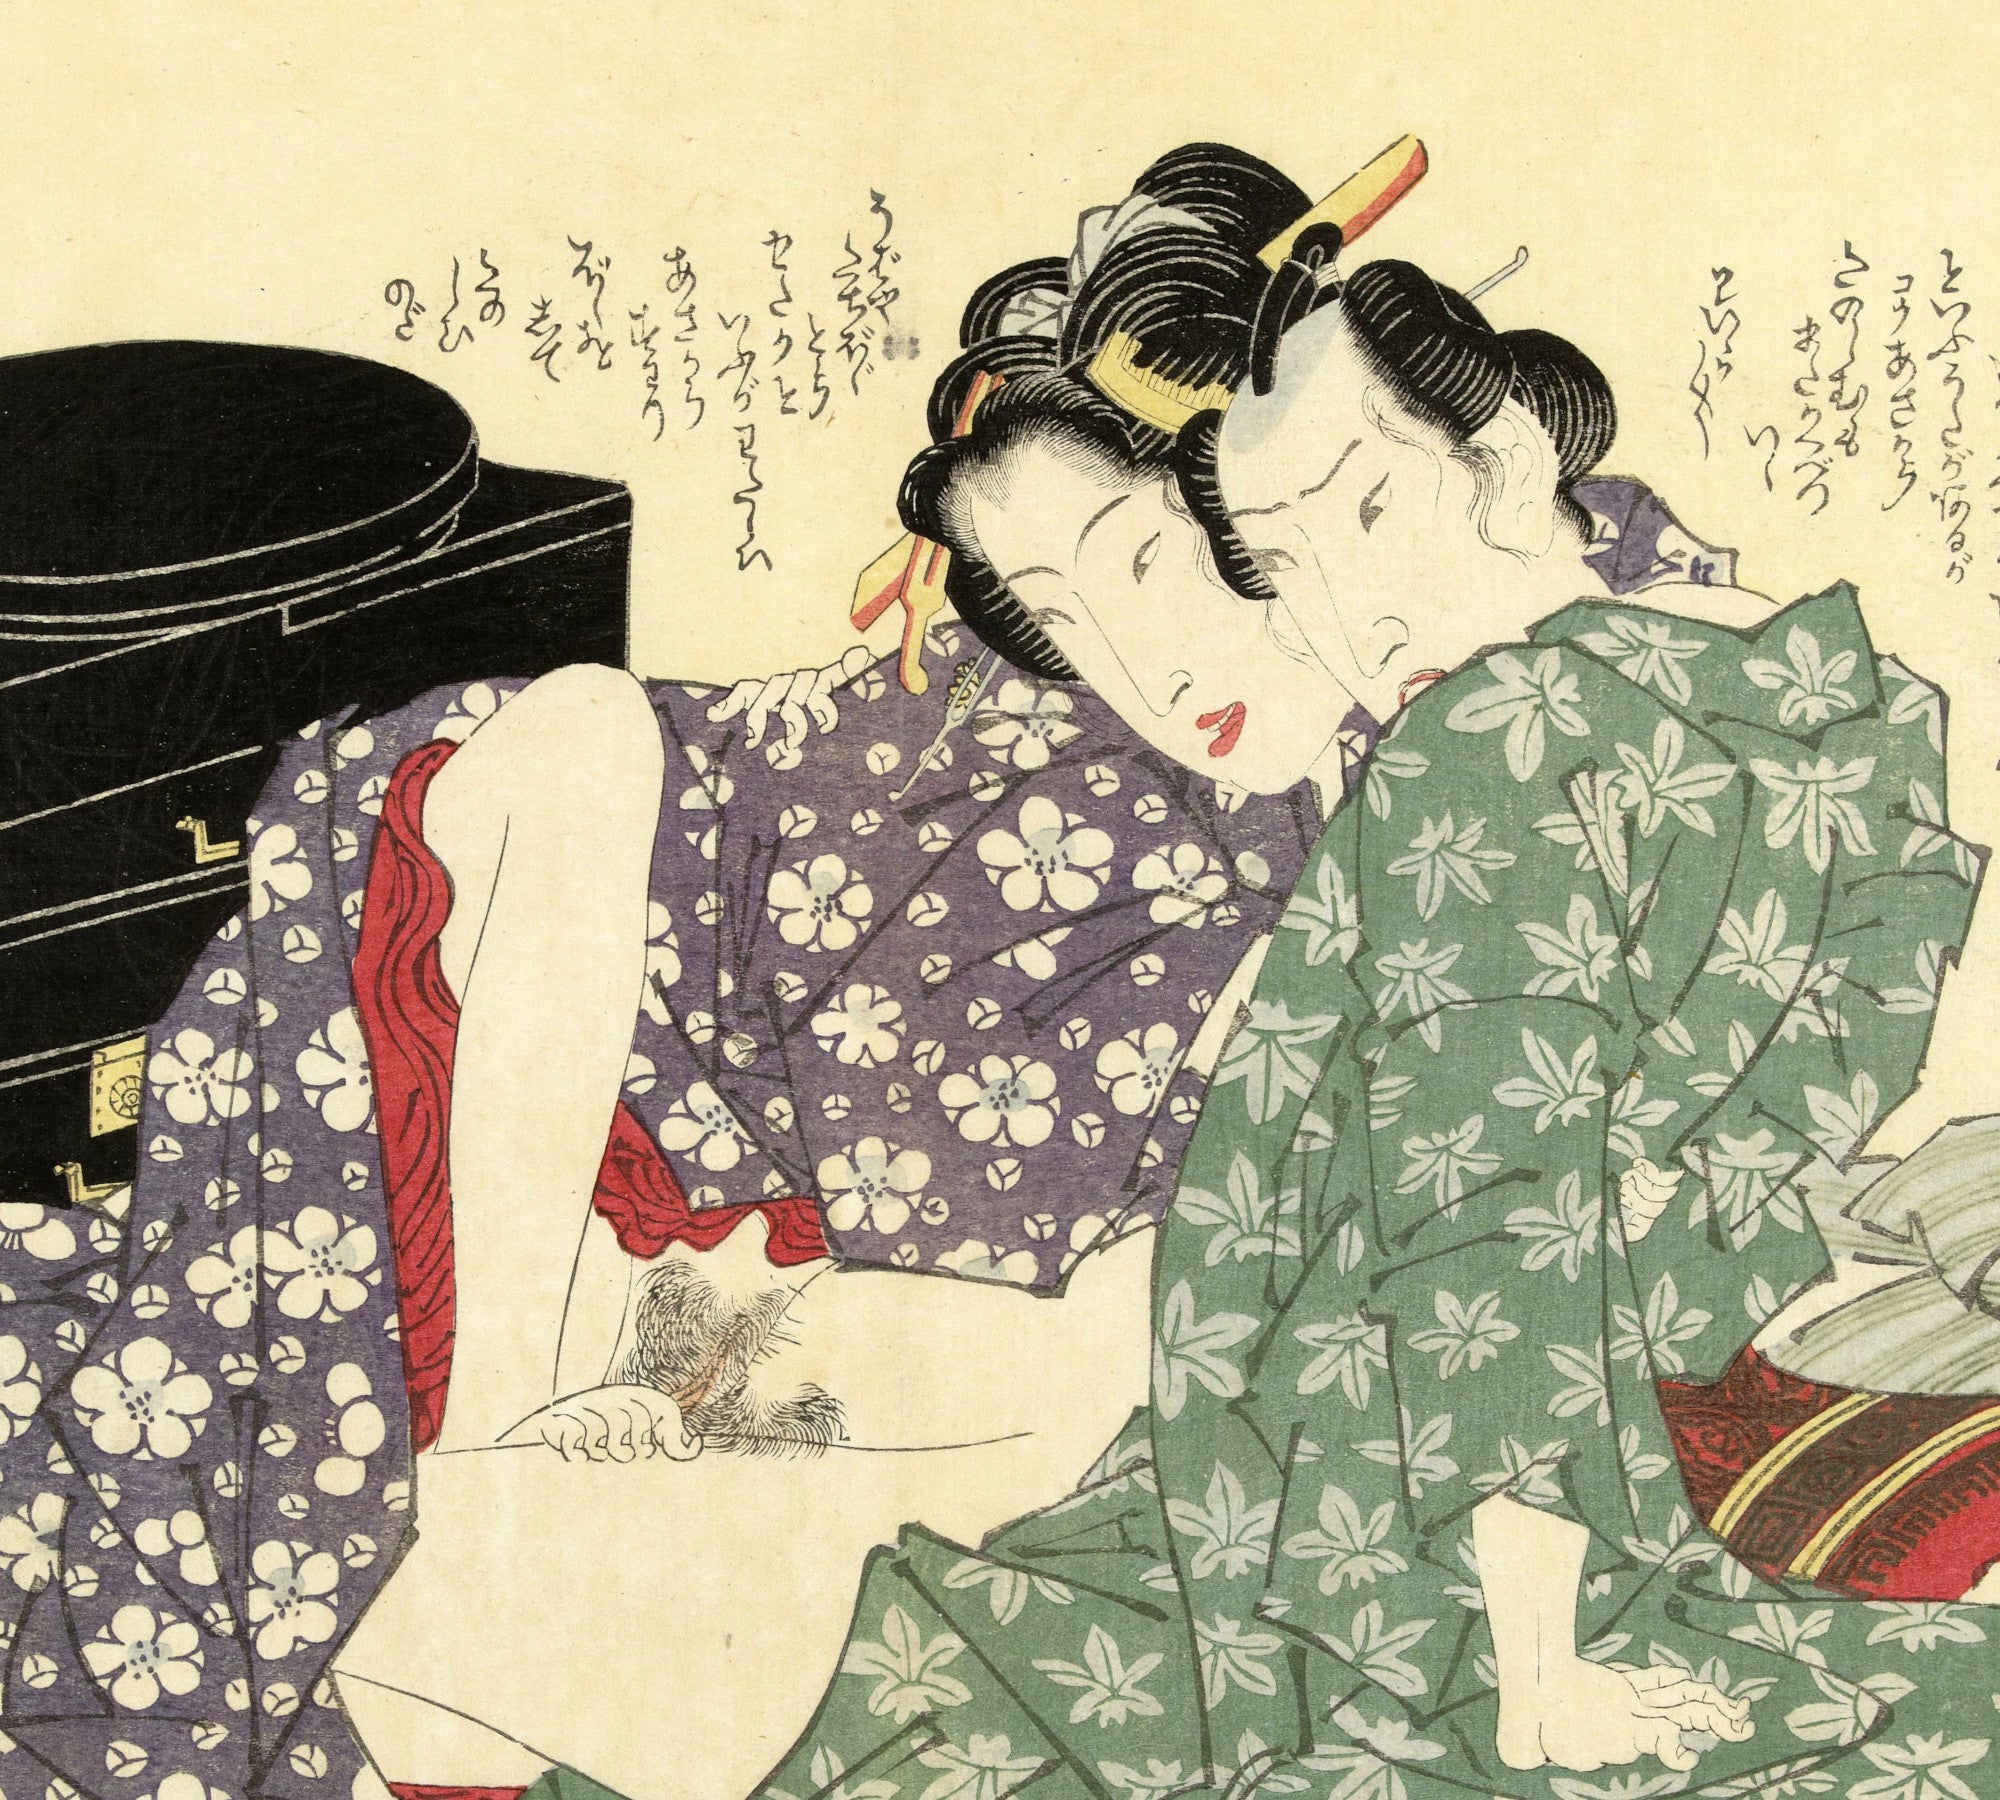 Copy of Keisai Eisen, Japanese Shunga Art Print : Couple